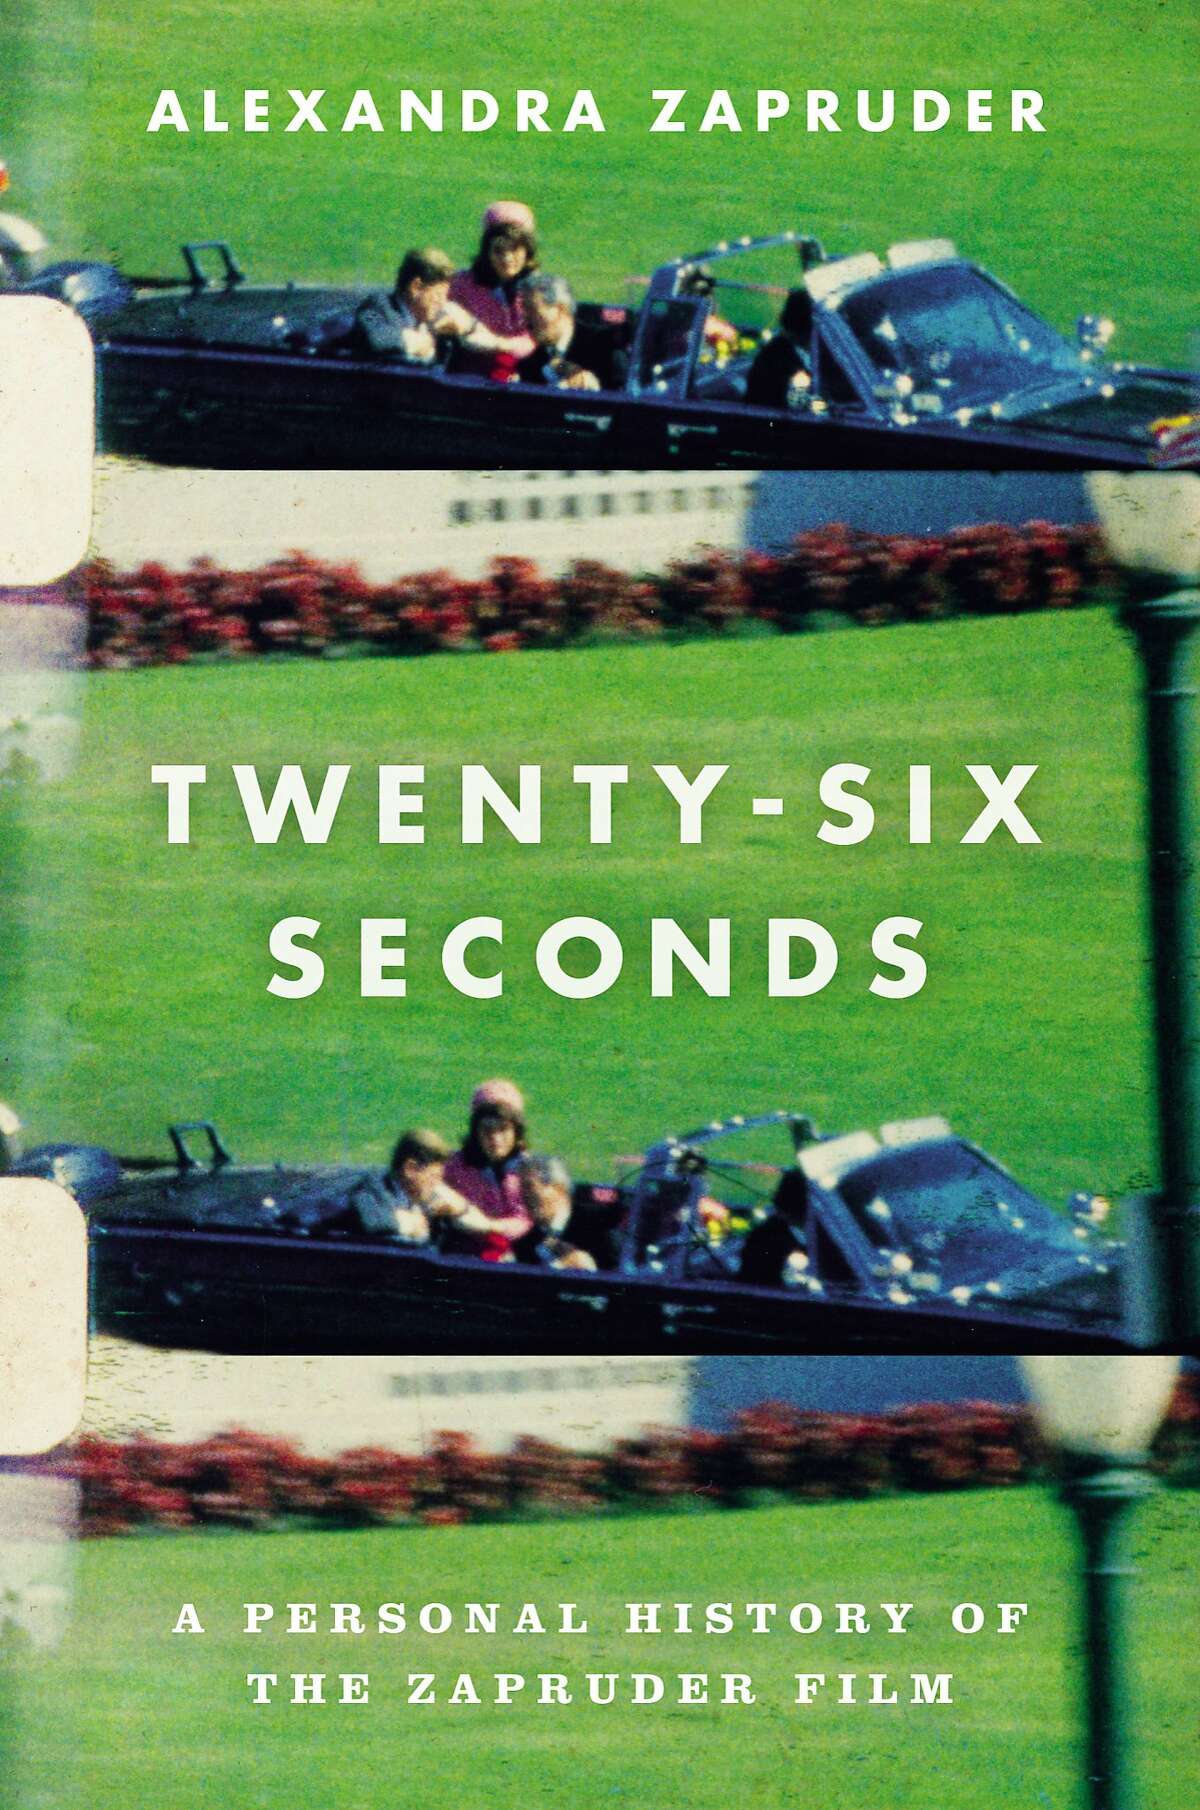 "Twenty-Six Seconds"